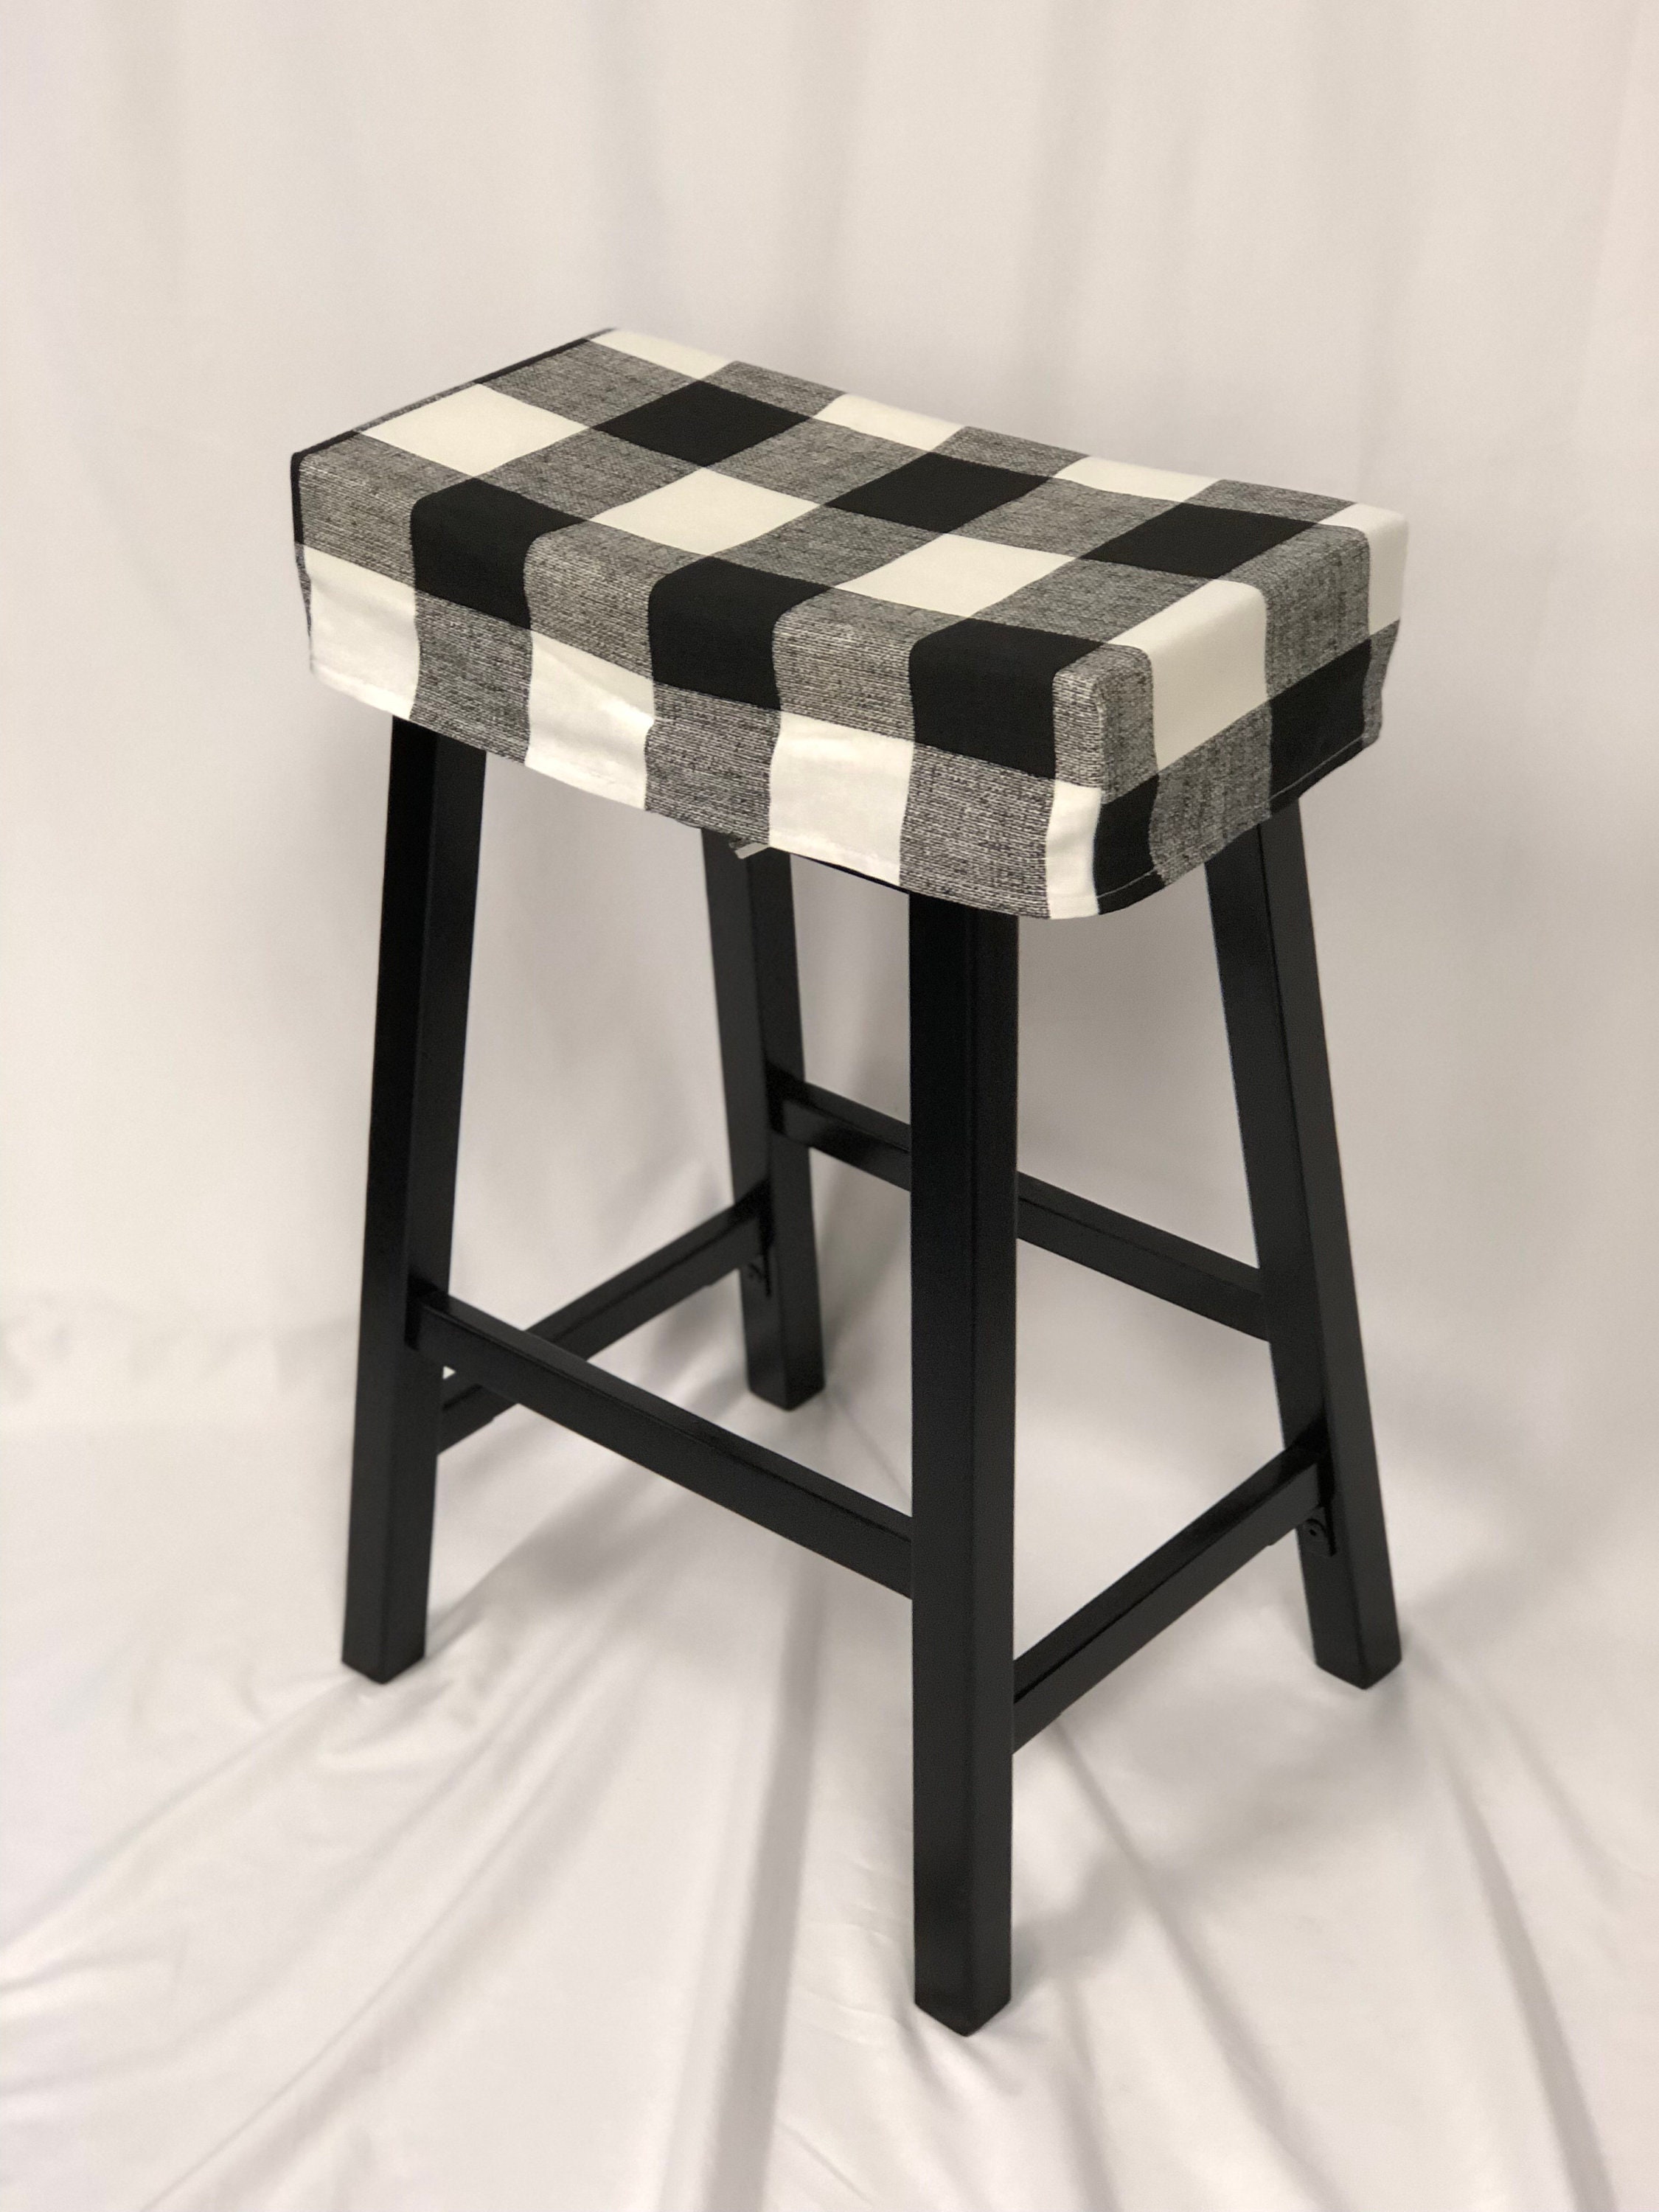 baibu Non Slip Rectangle Bench Stool Cushion, Kitchen Counter Stool Covers  Saddle Stool Seat Cushions with Elasticized Edge - One Pad Only (Black